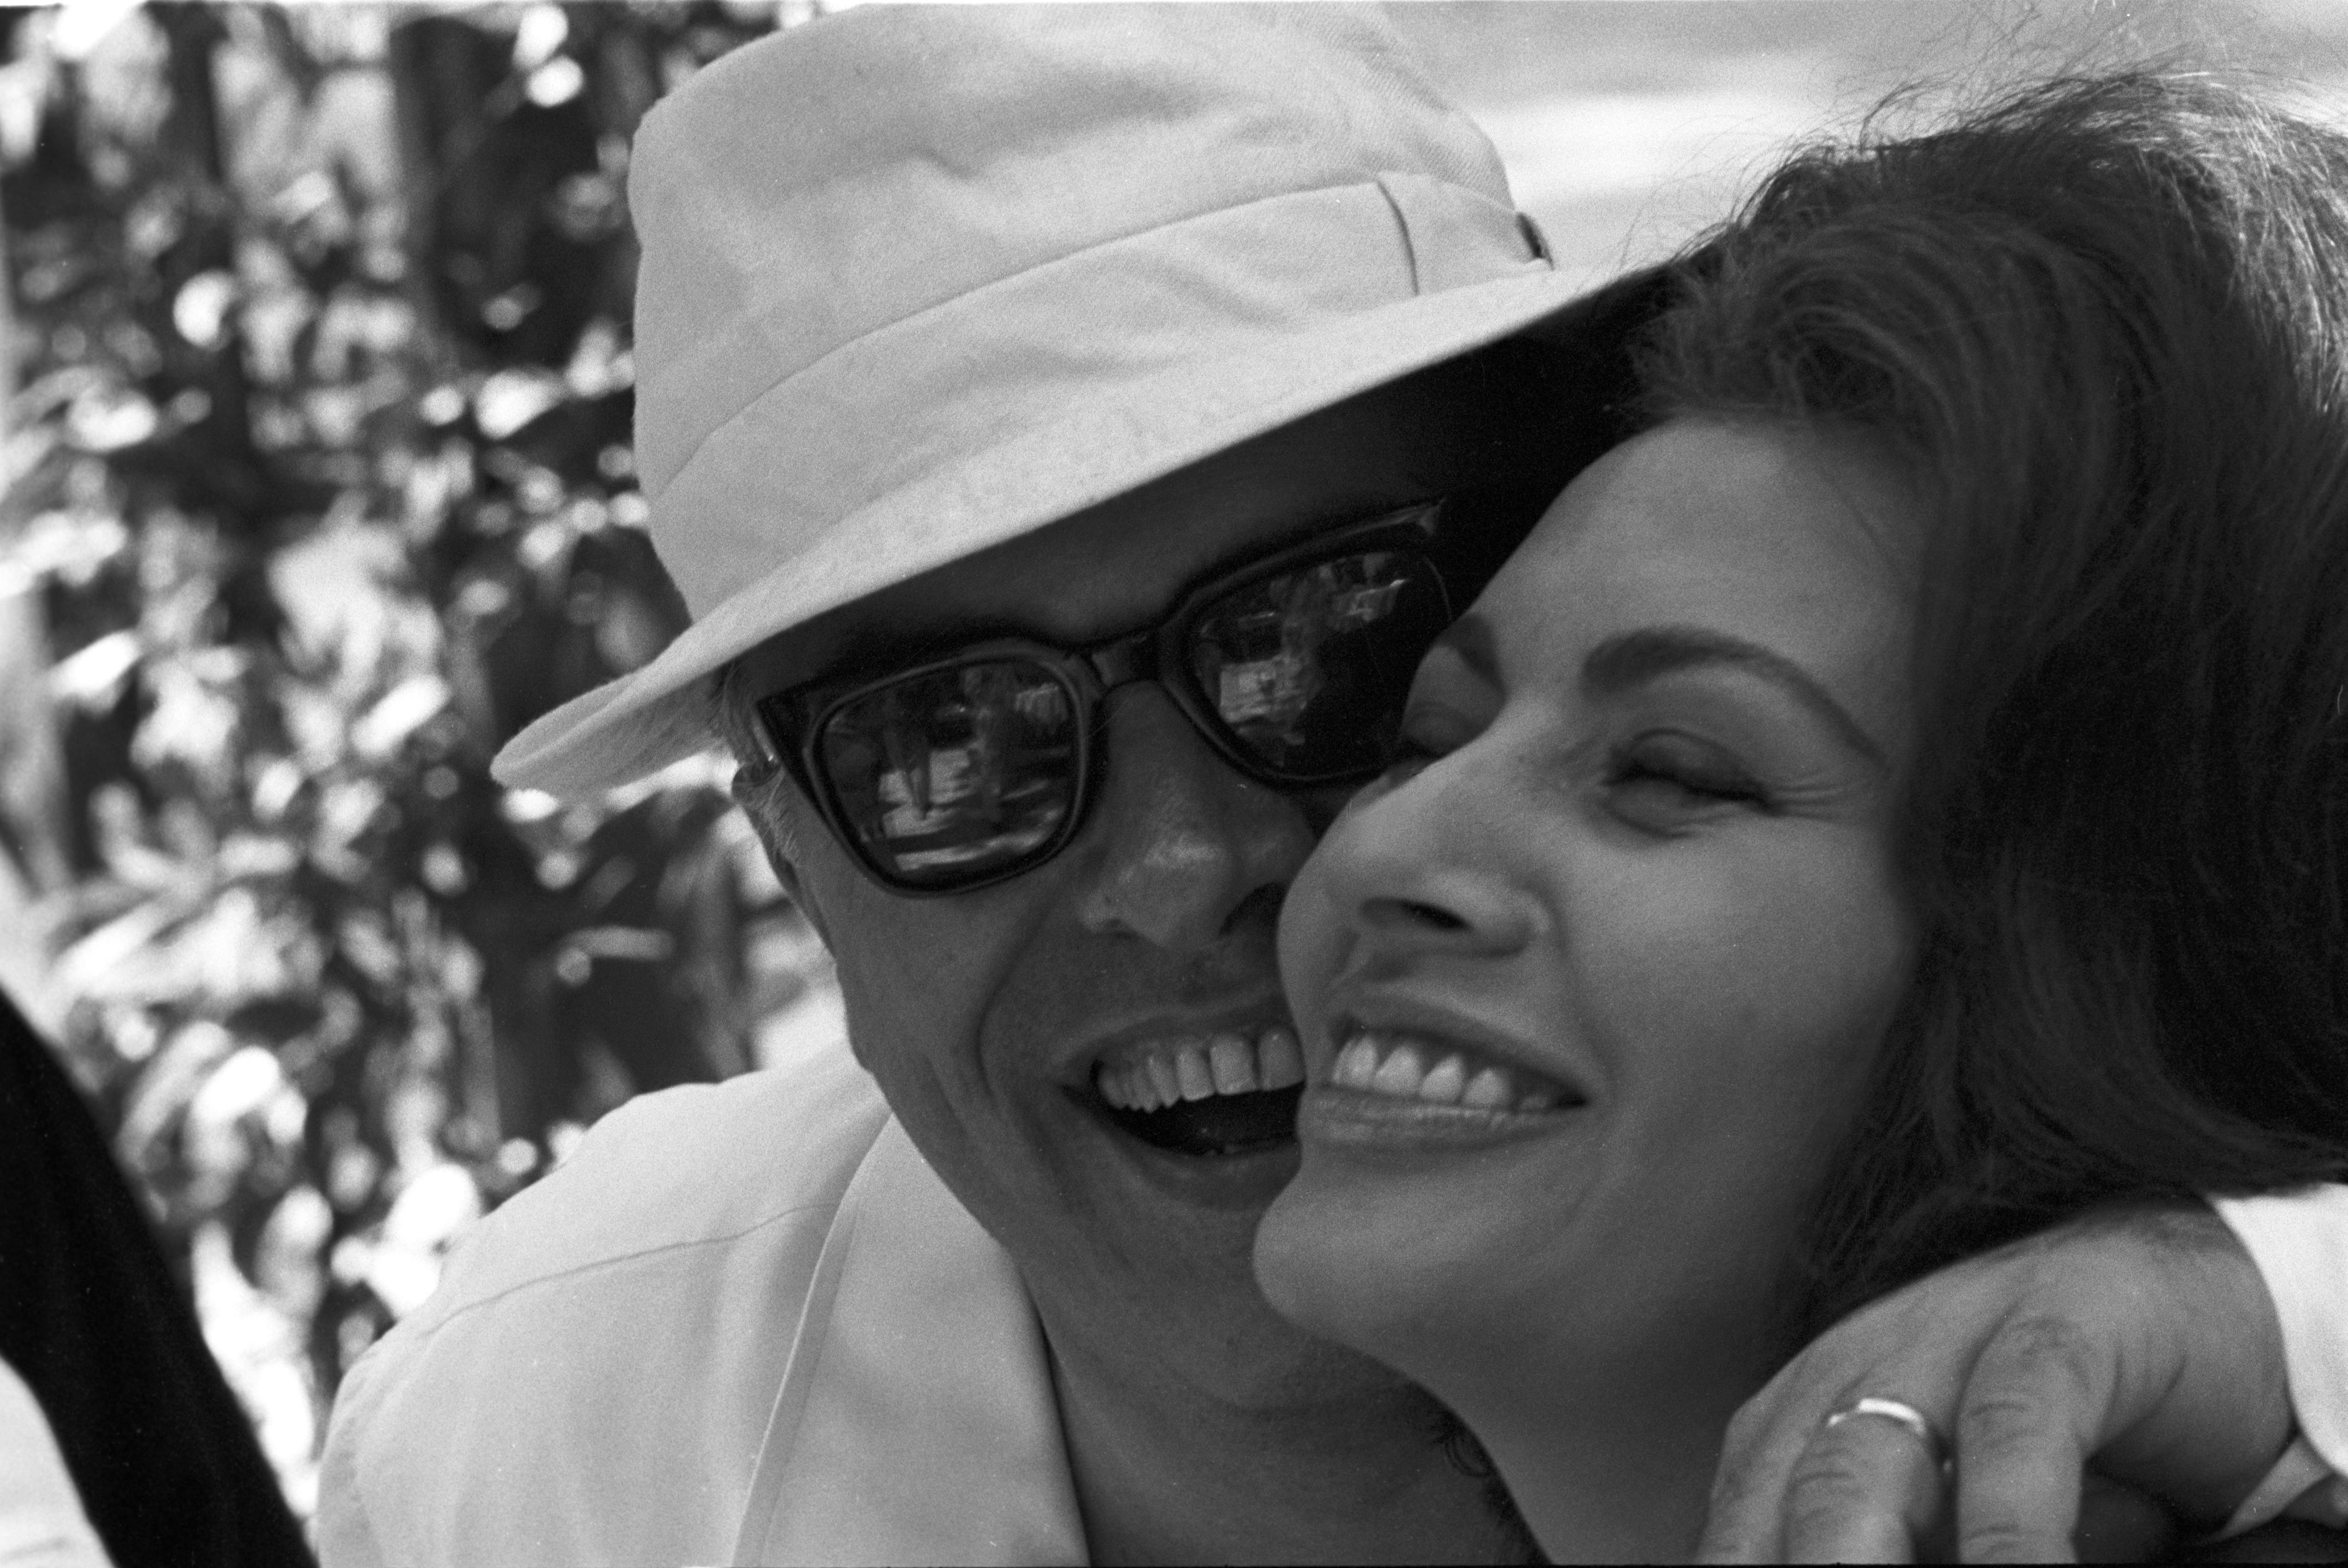 Carlo Ponti and Sophia Loren on the set of "The Condemned of Altona," in Germany, 1962. | Source: Pierluigi Praturlon/Reporters Associati & Archivi/Mondadori Portfolio/Getty Images